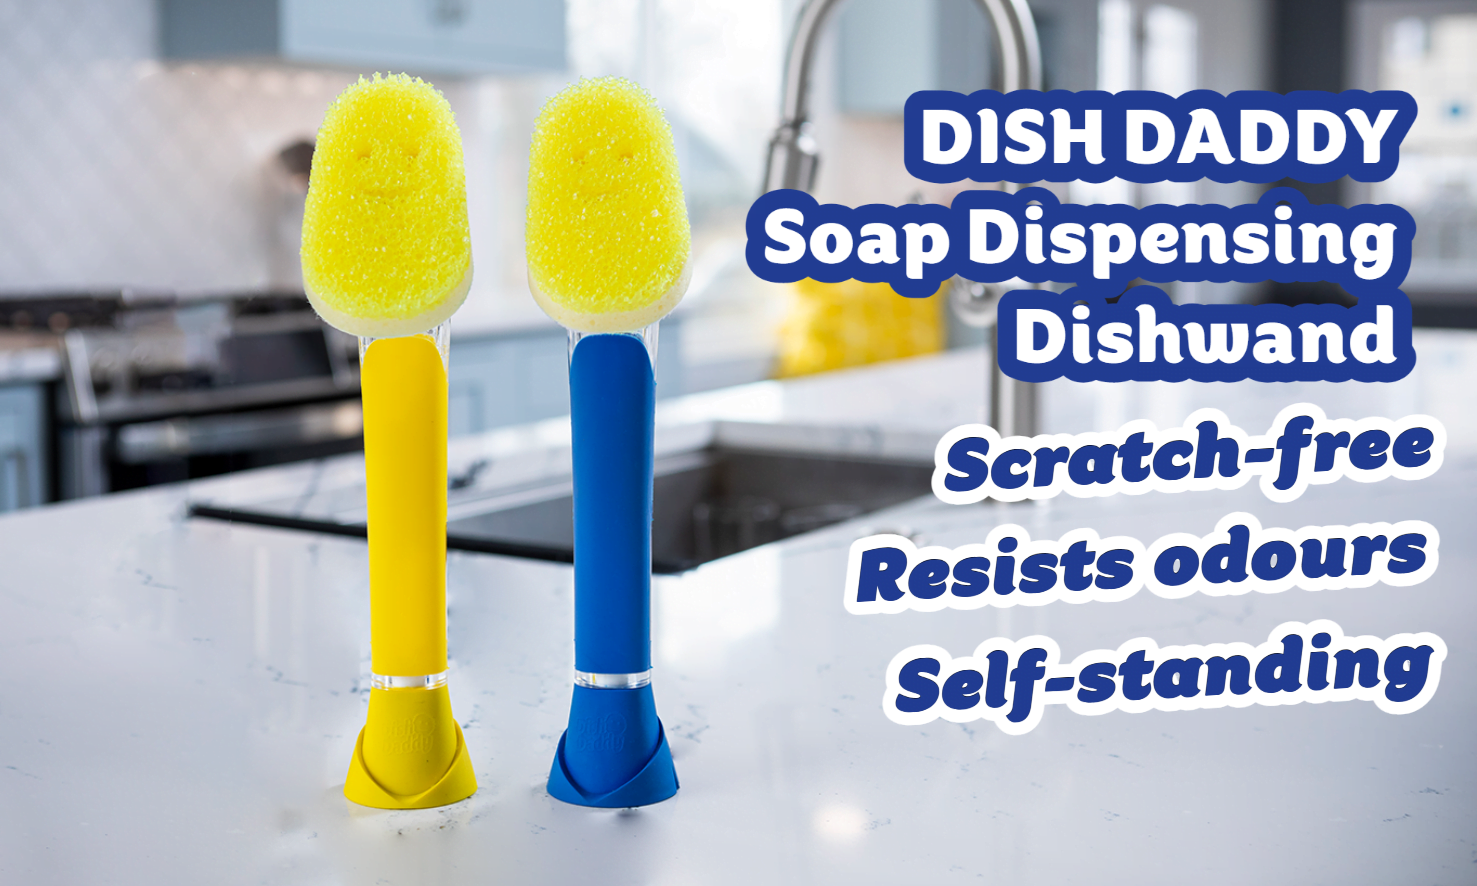 Dish Daddy Scrub Daddy Self-Standing Soap Dispensing Dishwand, New.